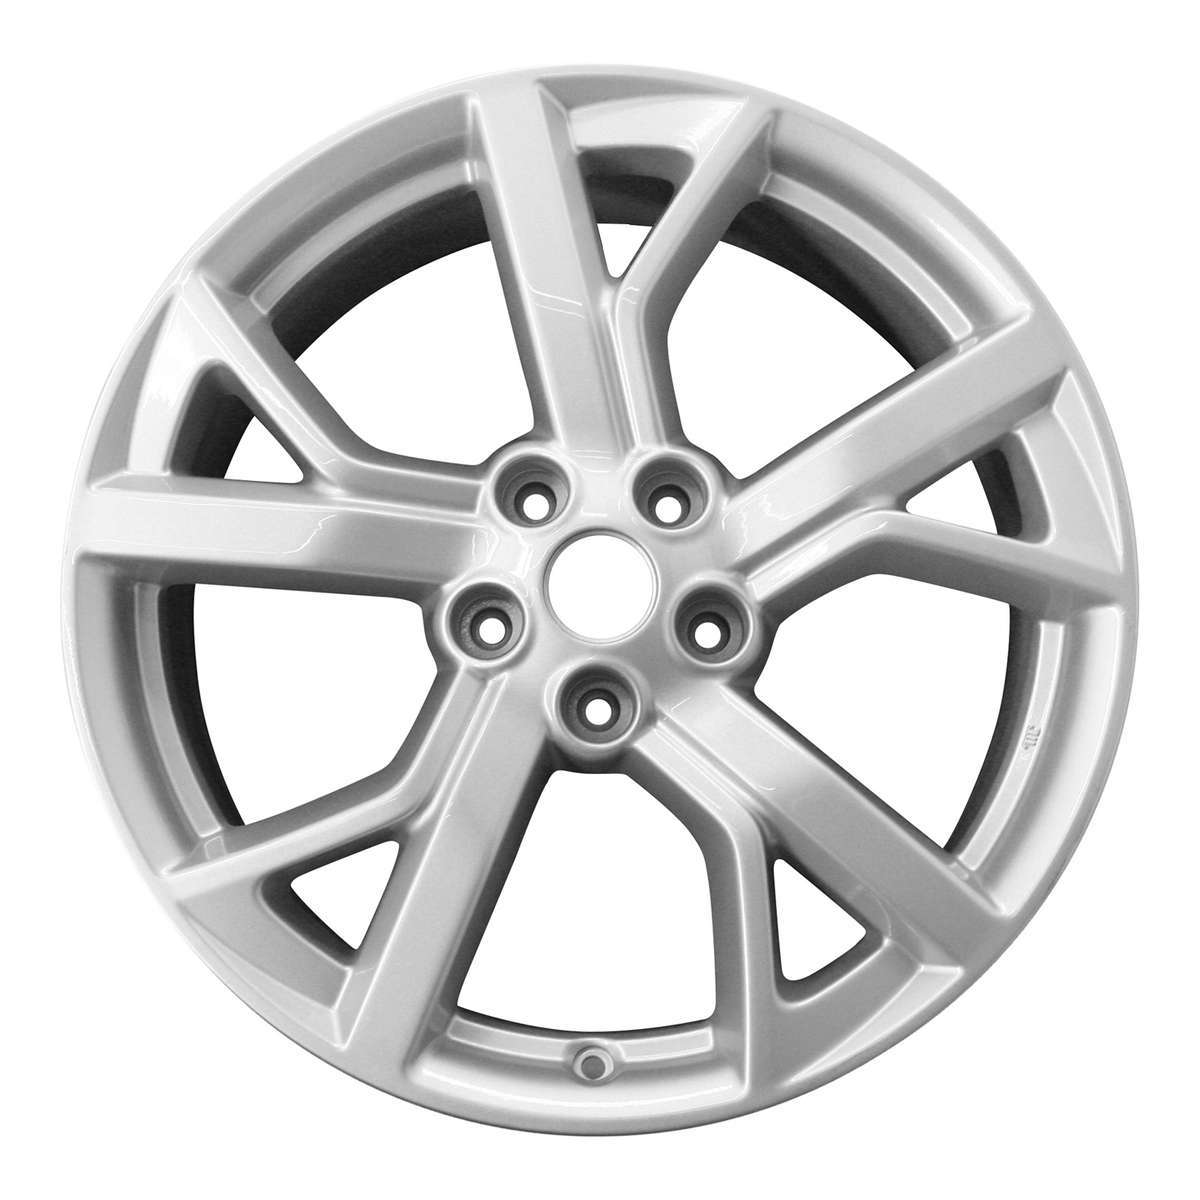 2014 Nissan Maxima 19" OEM Wheel Rim W62583S